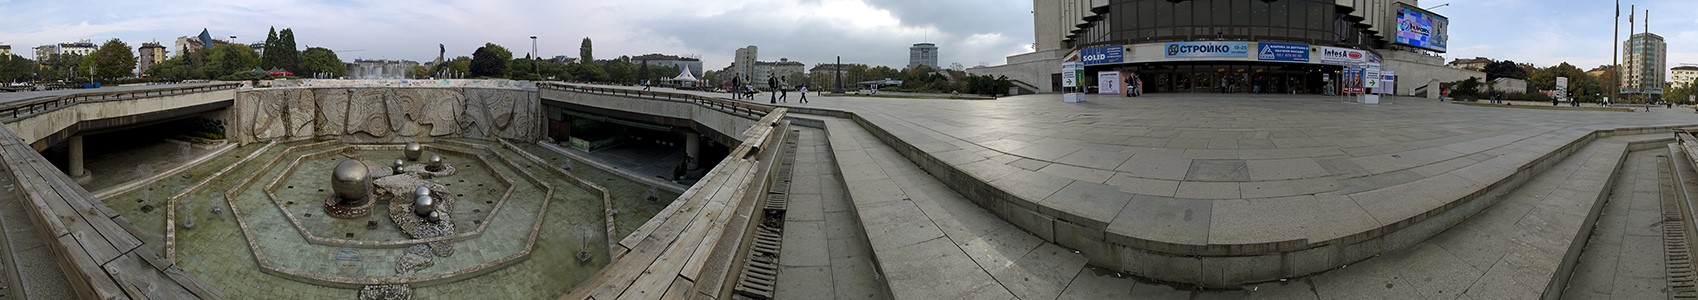 Sofia Bulgarienplatz und Nationaler Kulturpalast (NDK)